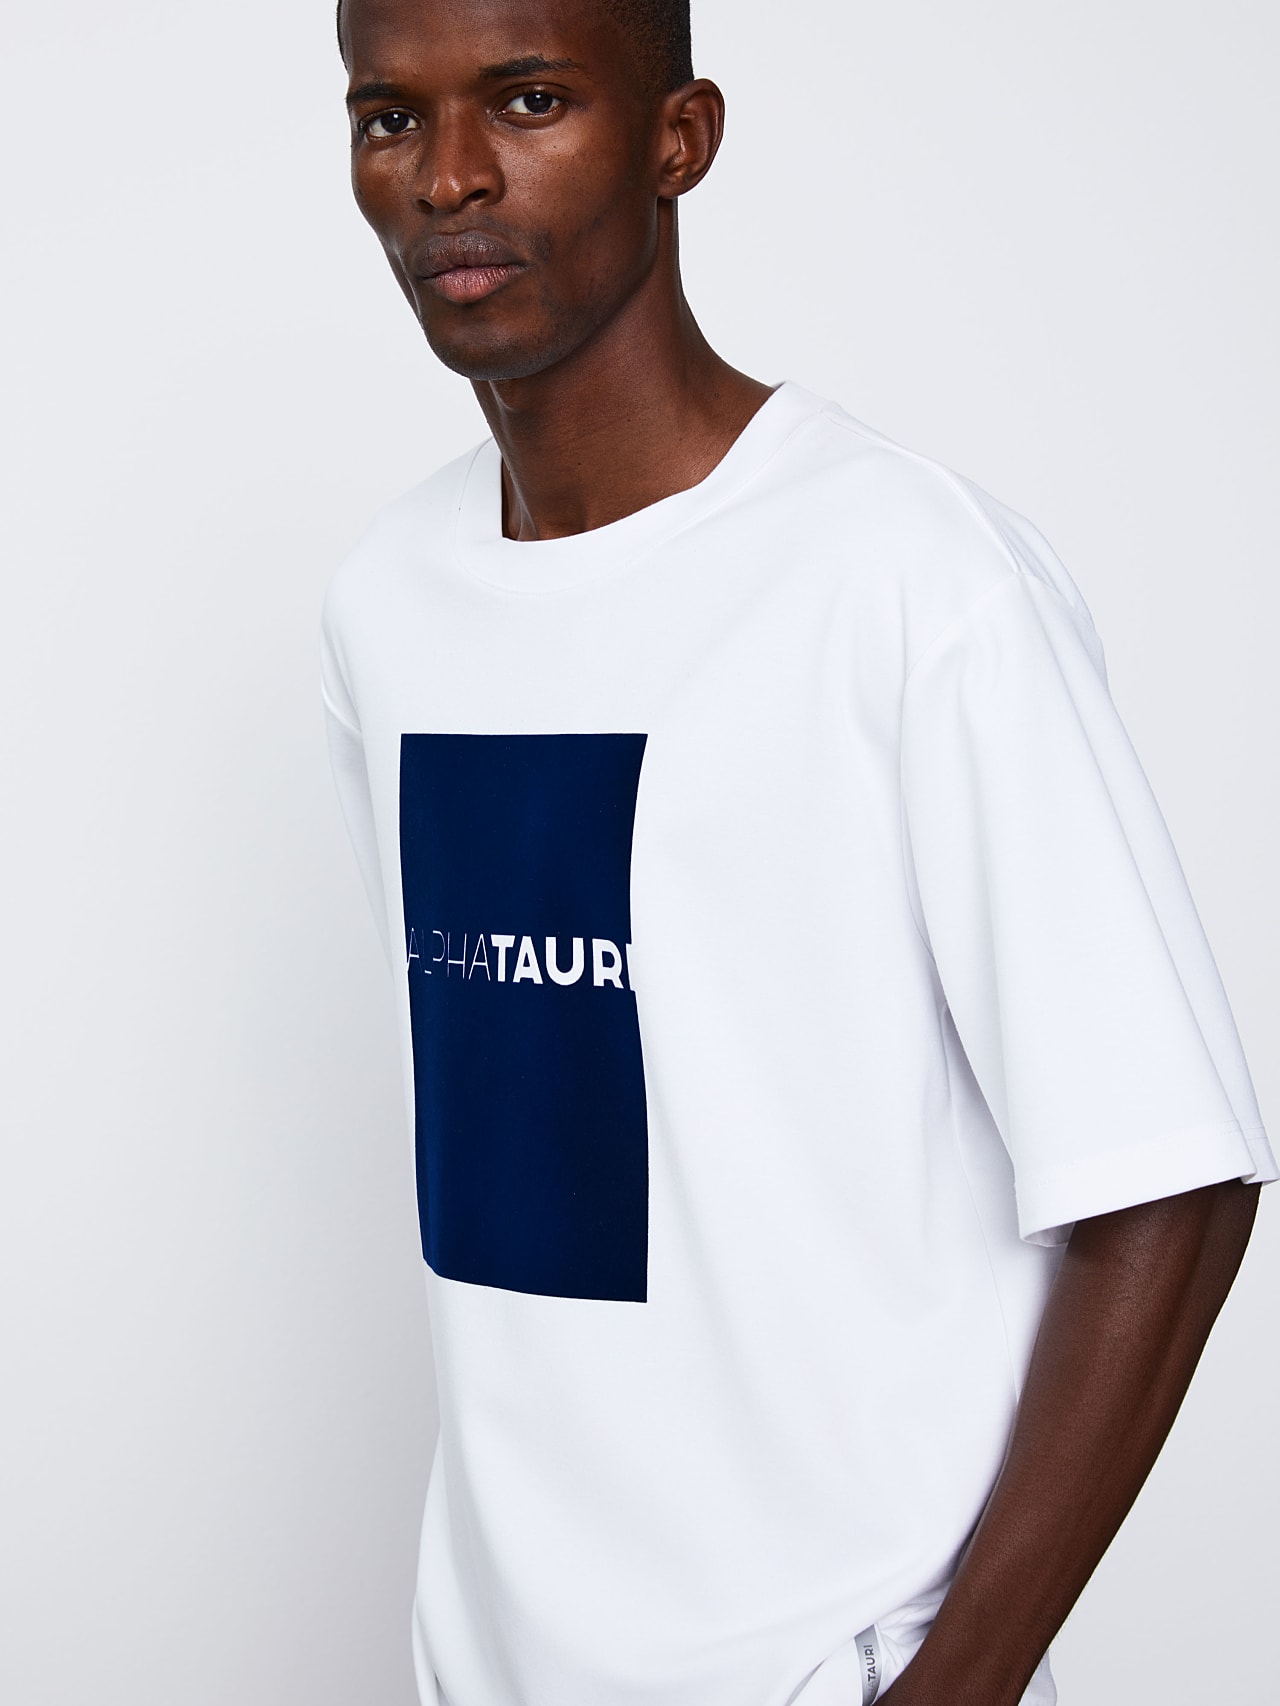 AlphaTauri | JAHEV V1.Y5.02 | Relaxed Logo T-Shirt in white / navy for Men